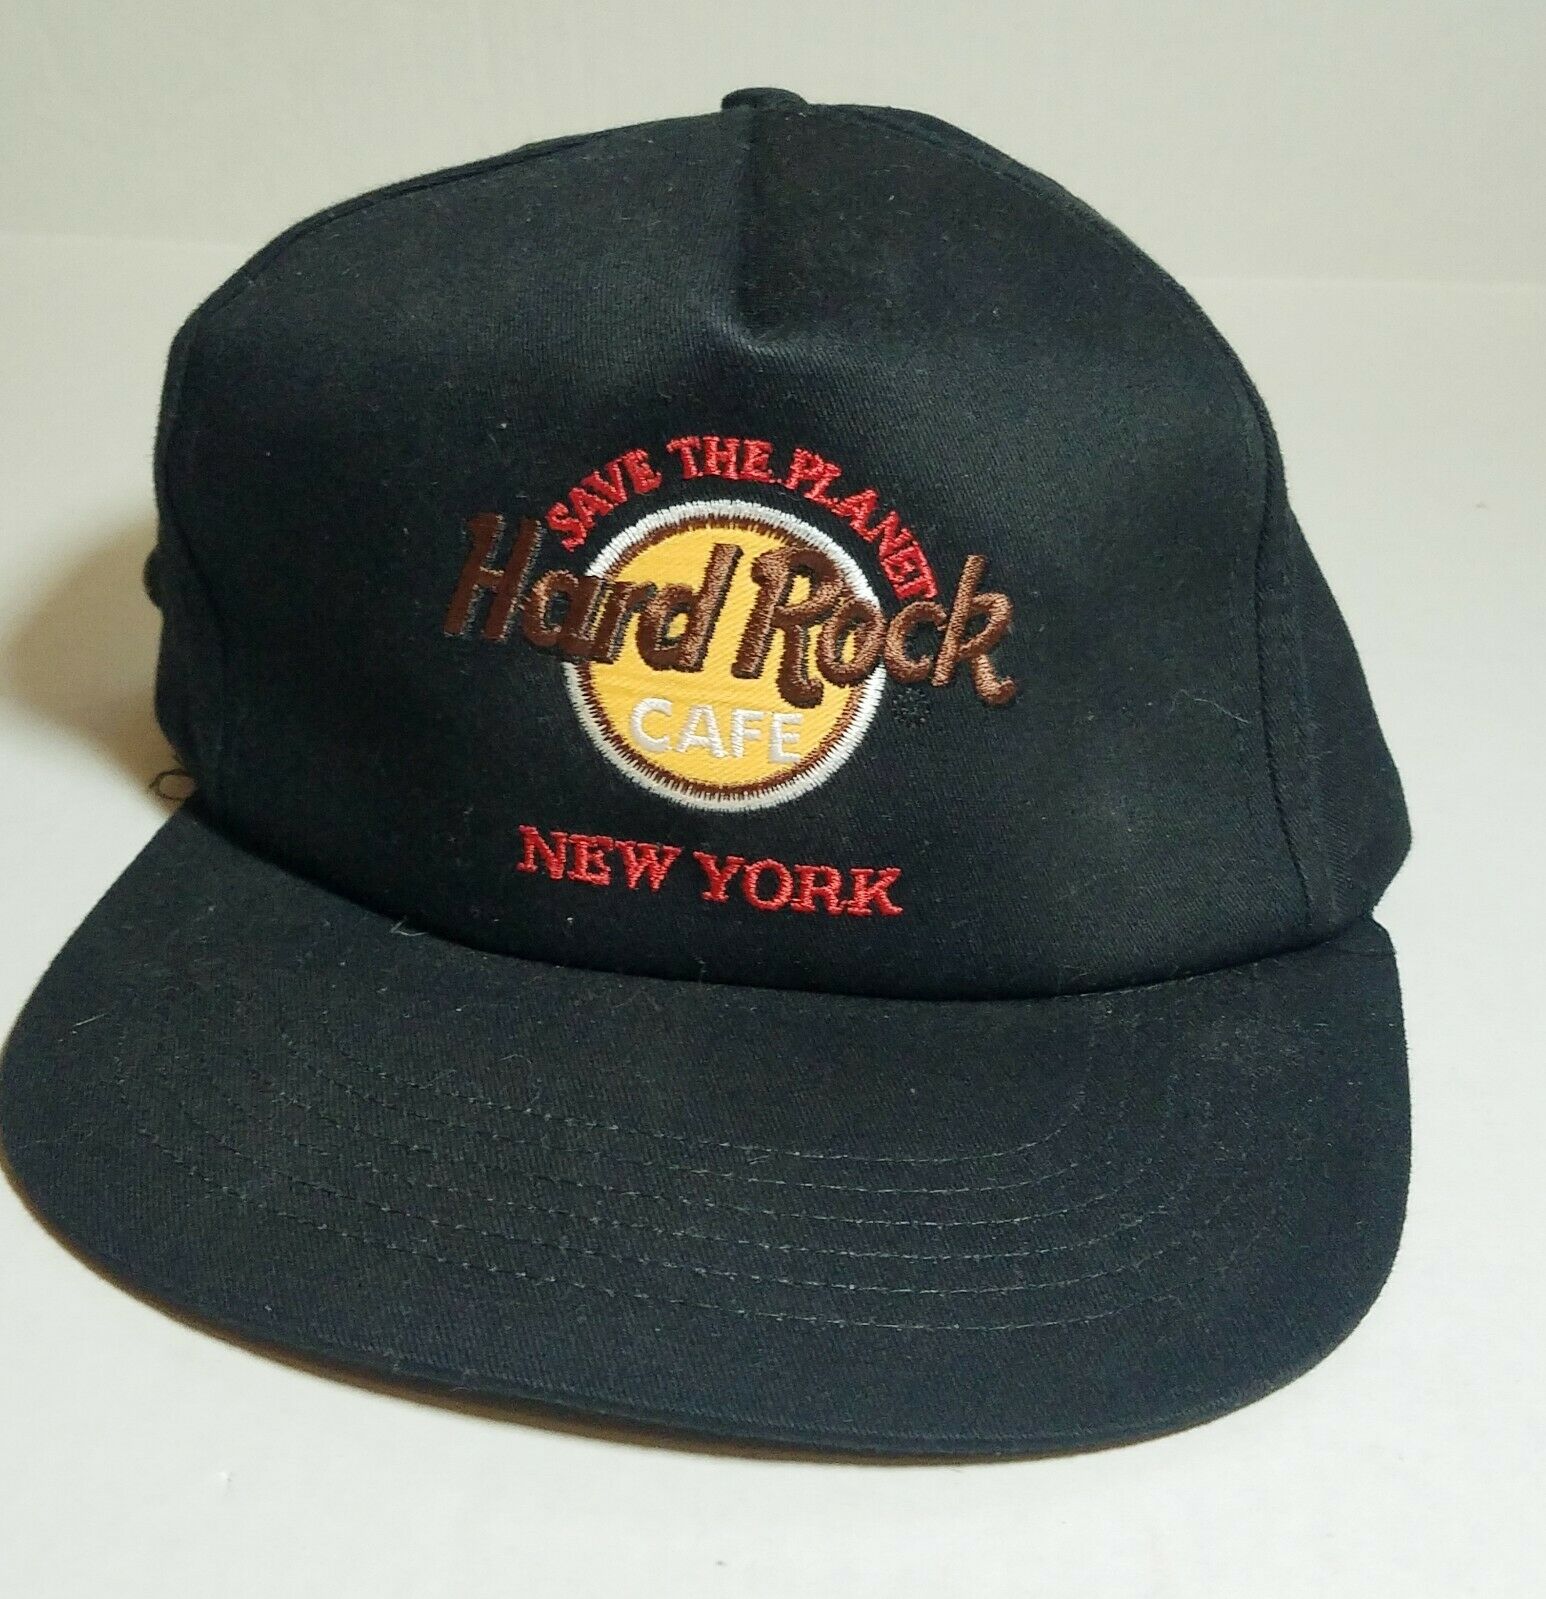 Vintage Hard Rock New York Baseball Hat Cap Snapback Adult Free Shipping